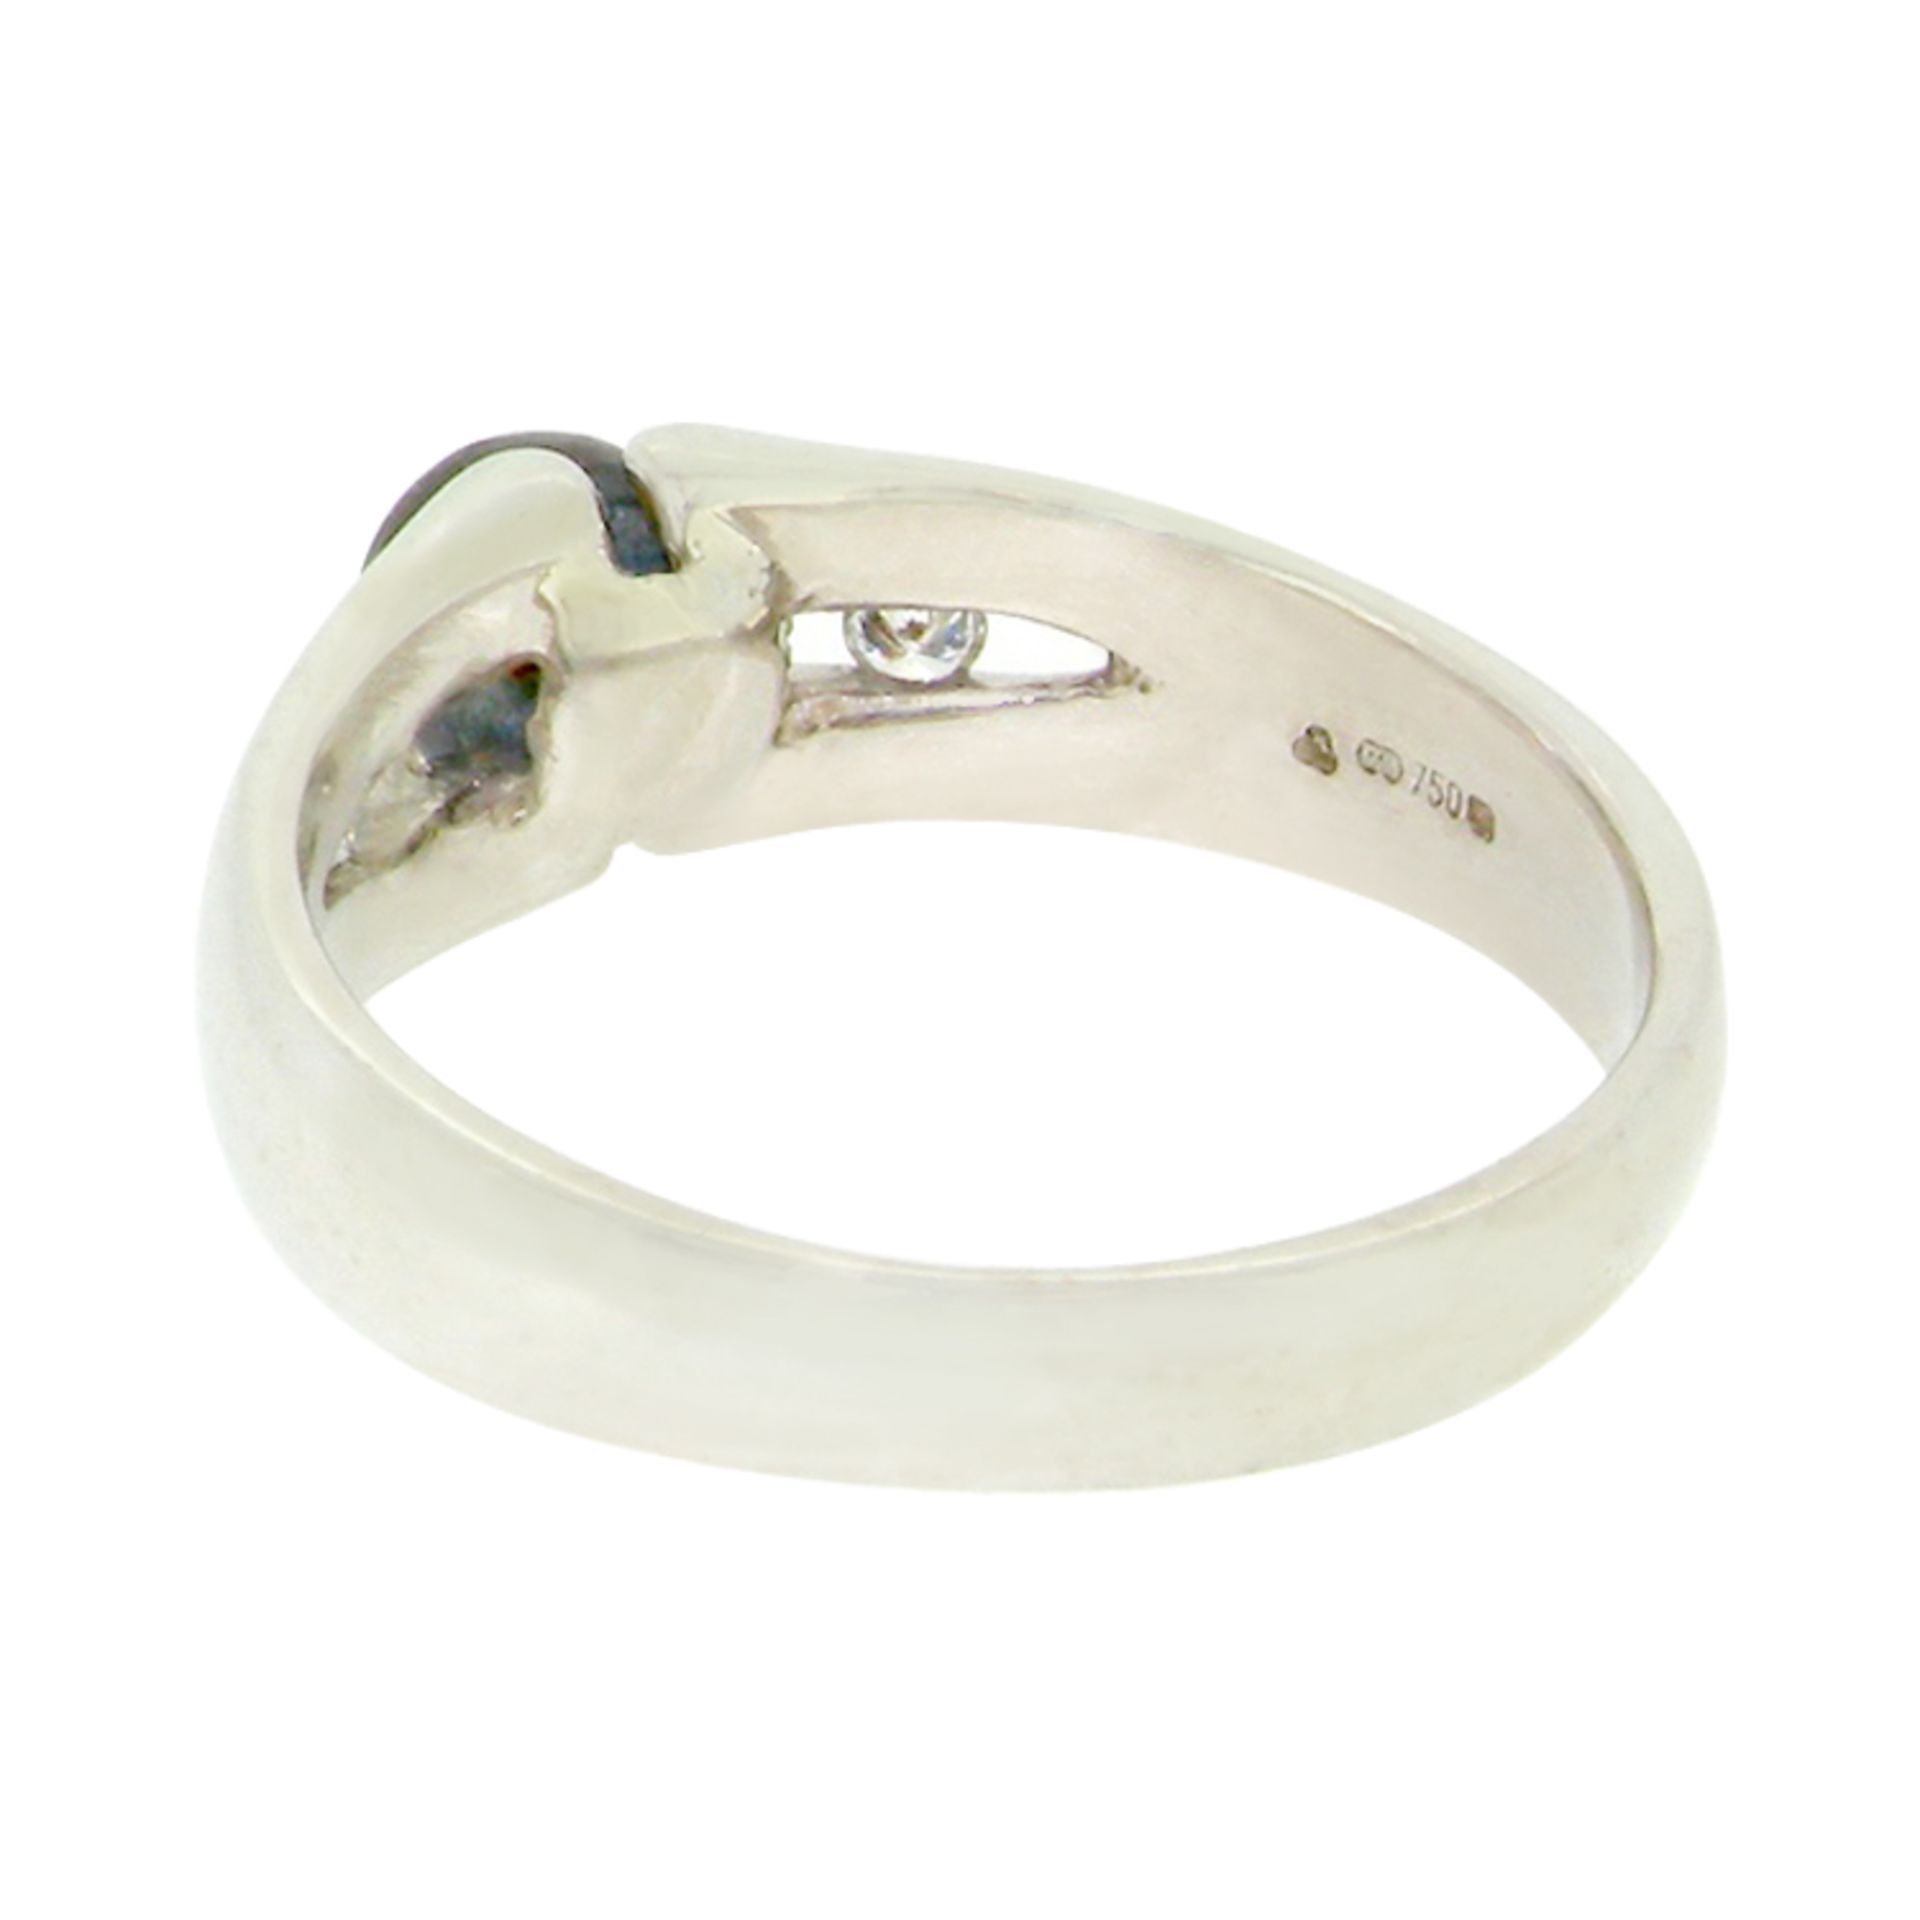 A Black Pearl & Diamond Dress Ring - Image 5 of 5